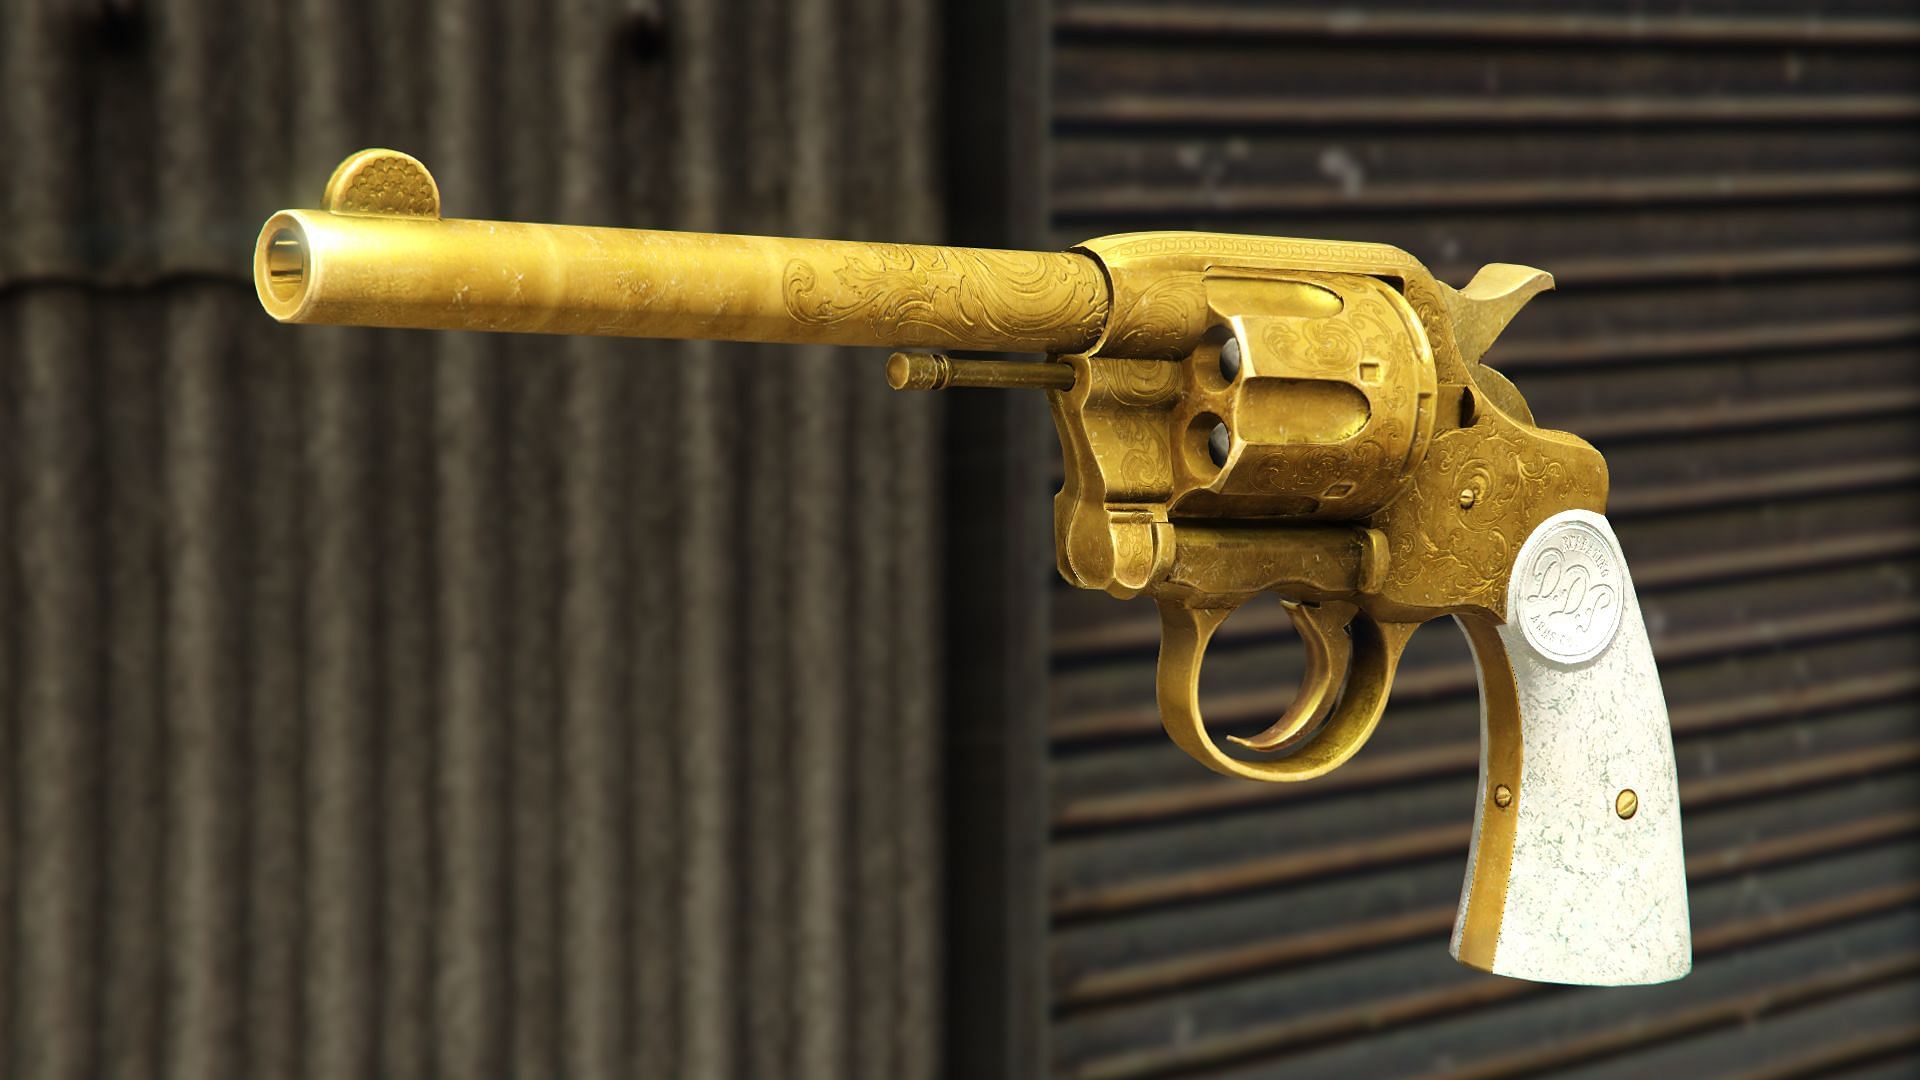 How the gun looks like in GTA Online (Image via Rockstar Games)